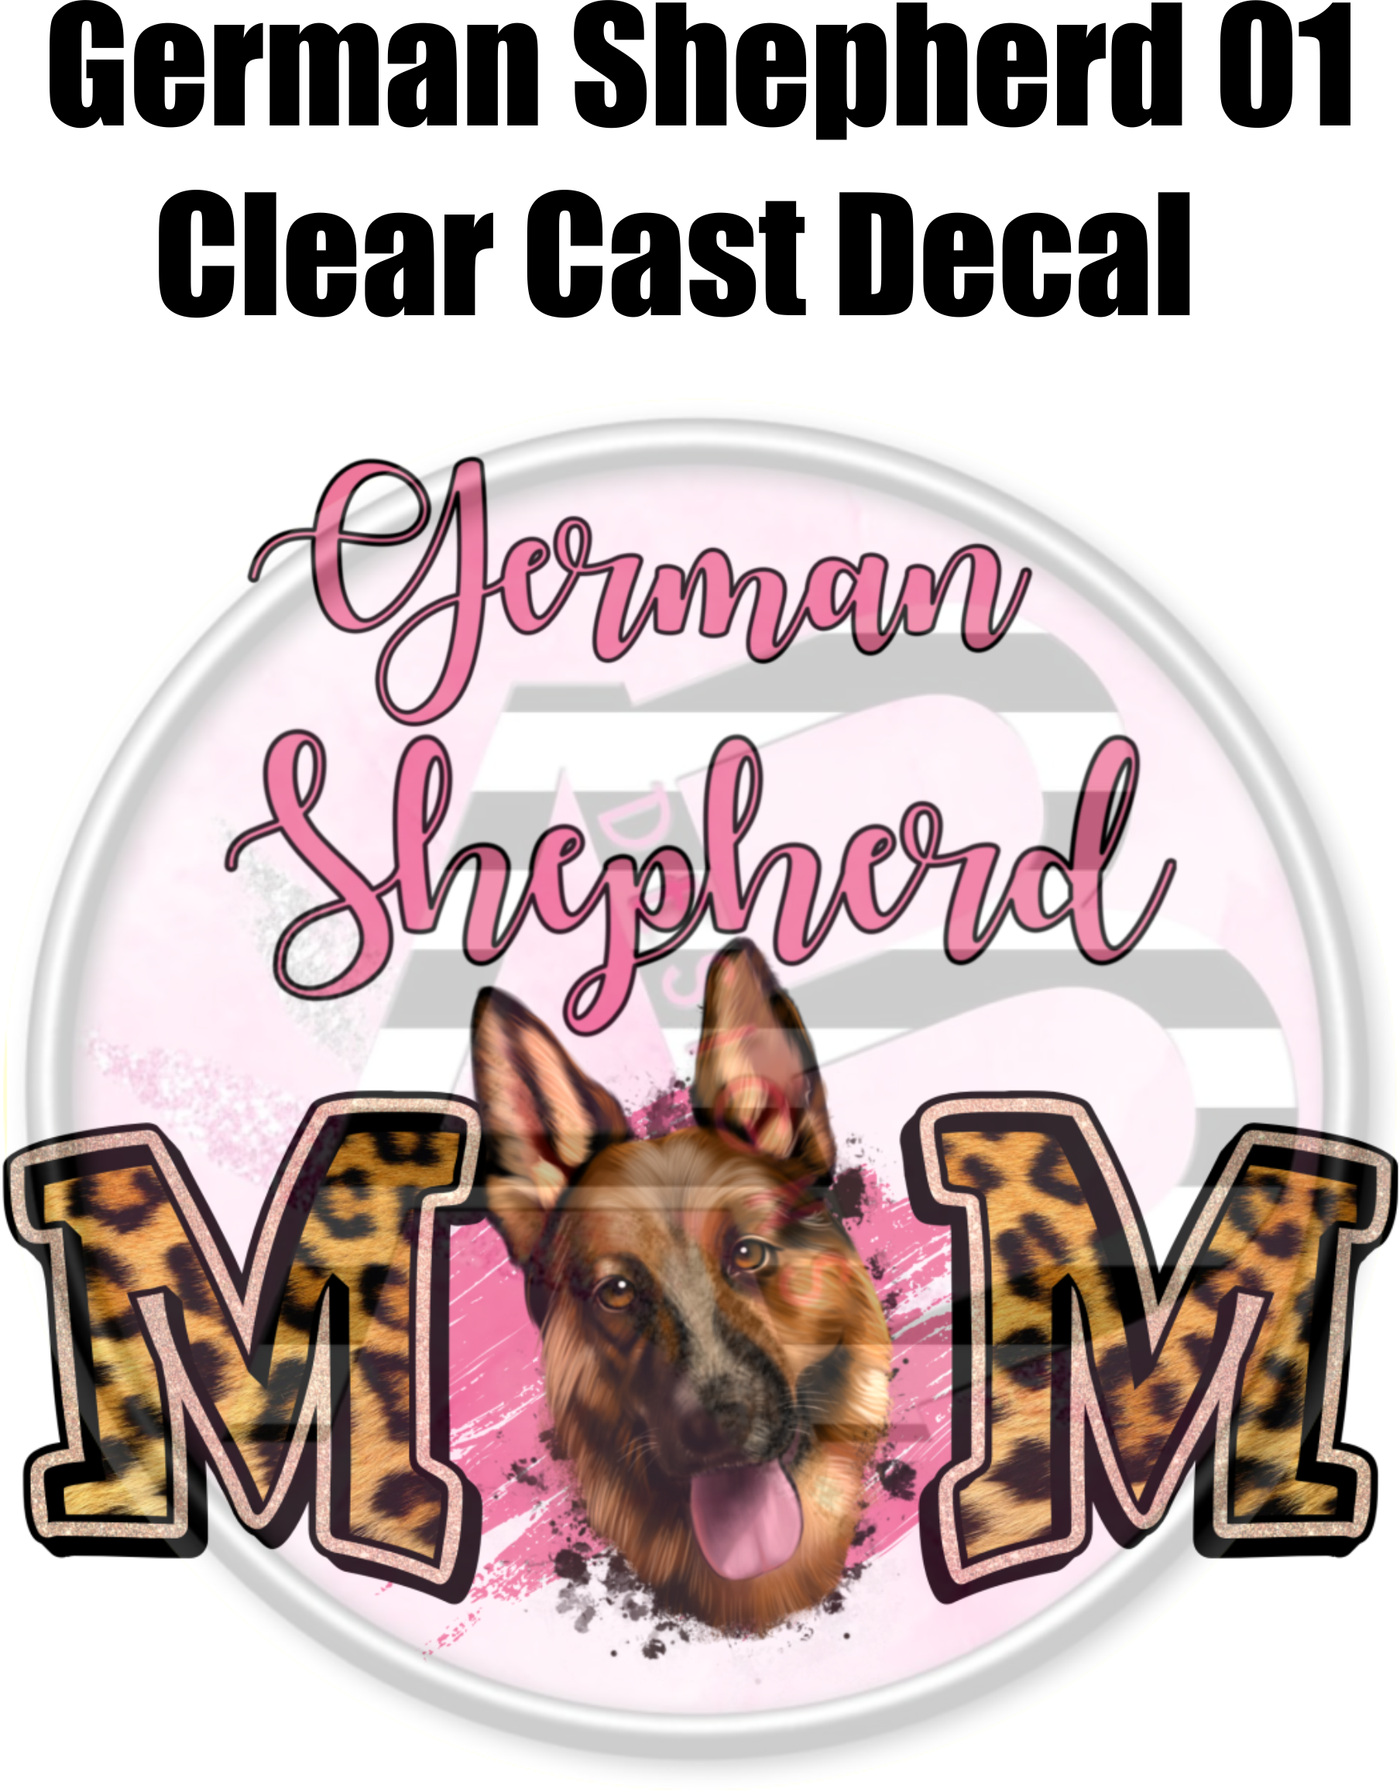 German Shepherd 01 - Clear Cast Decal